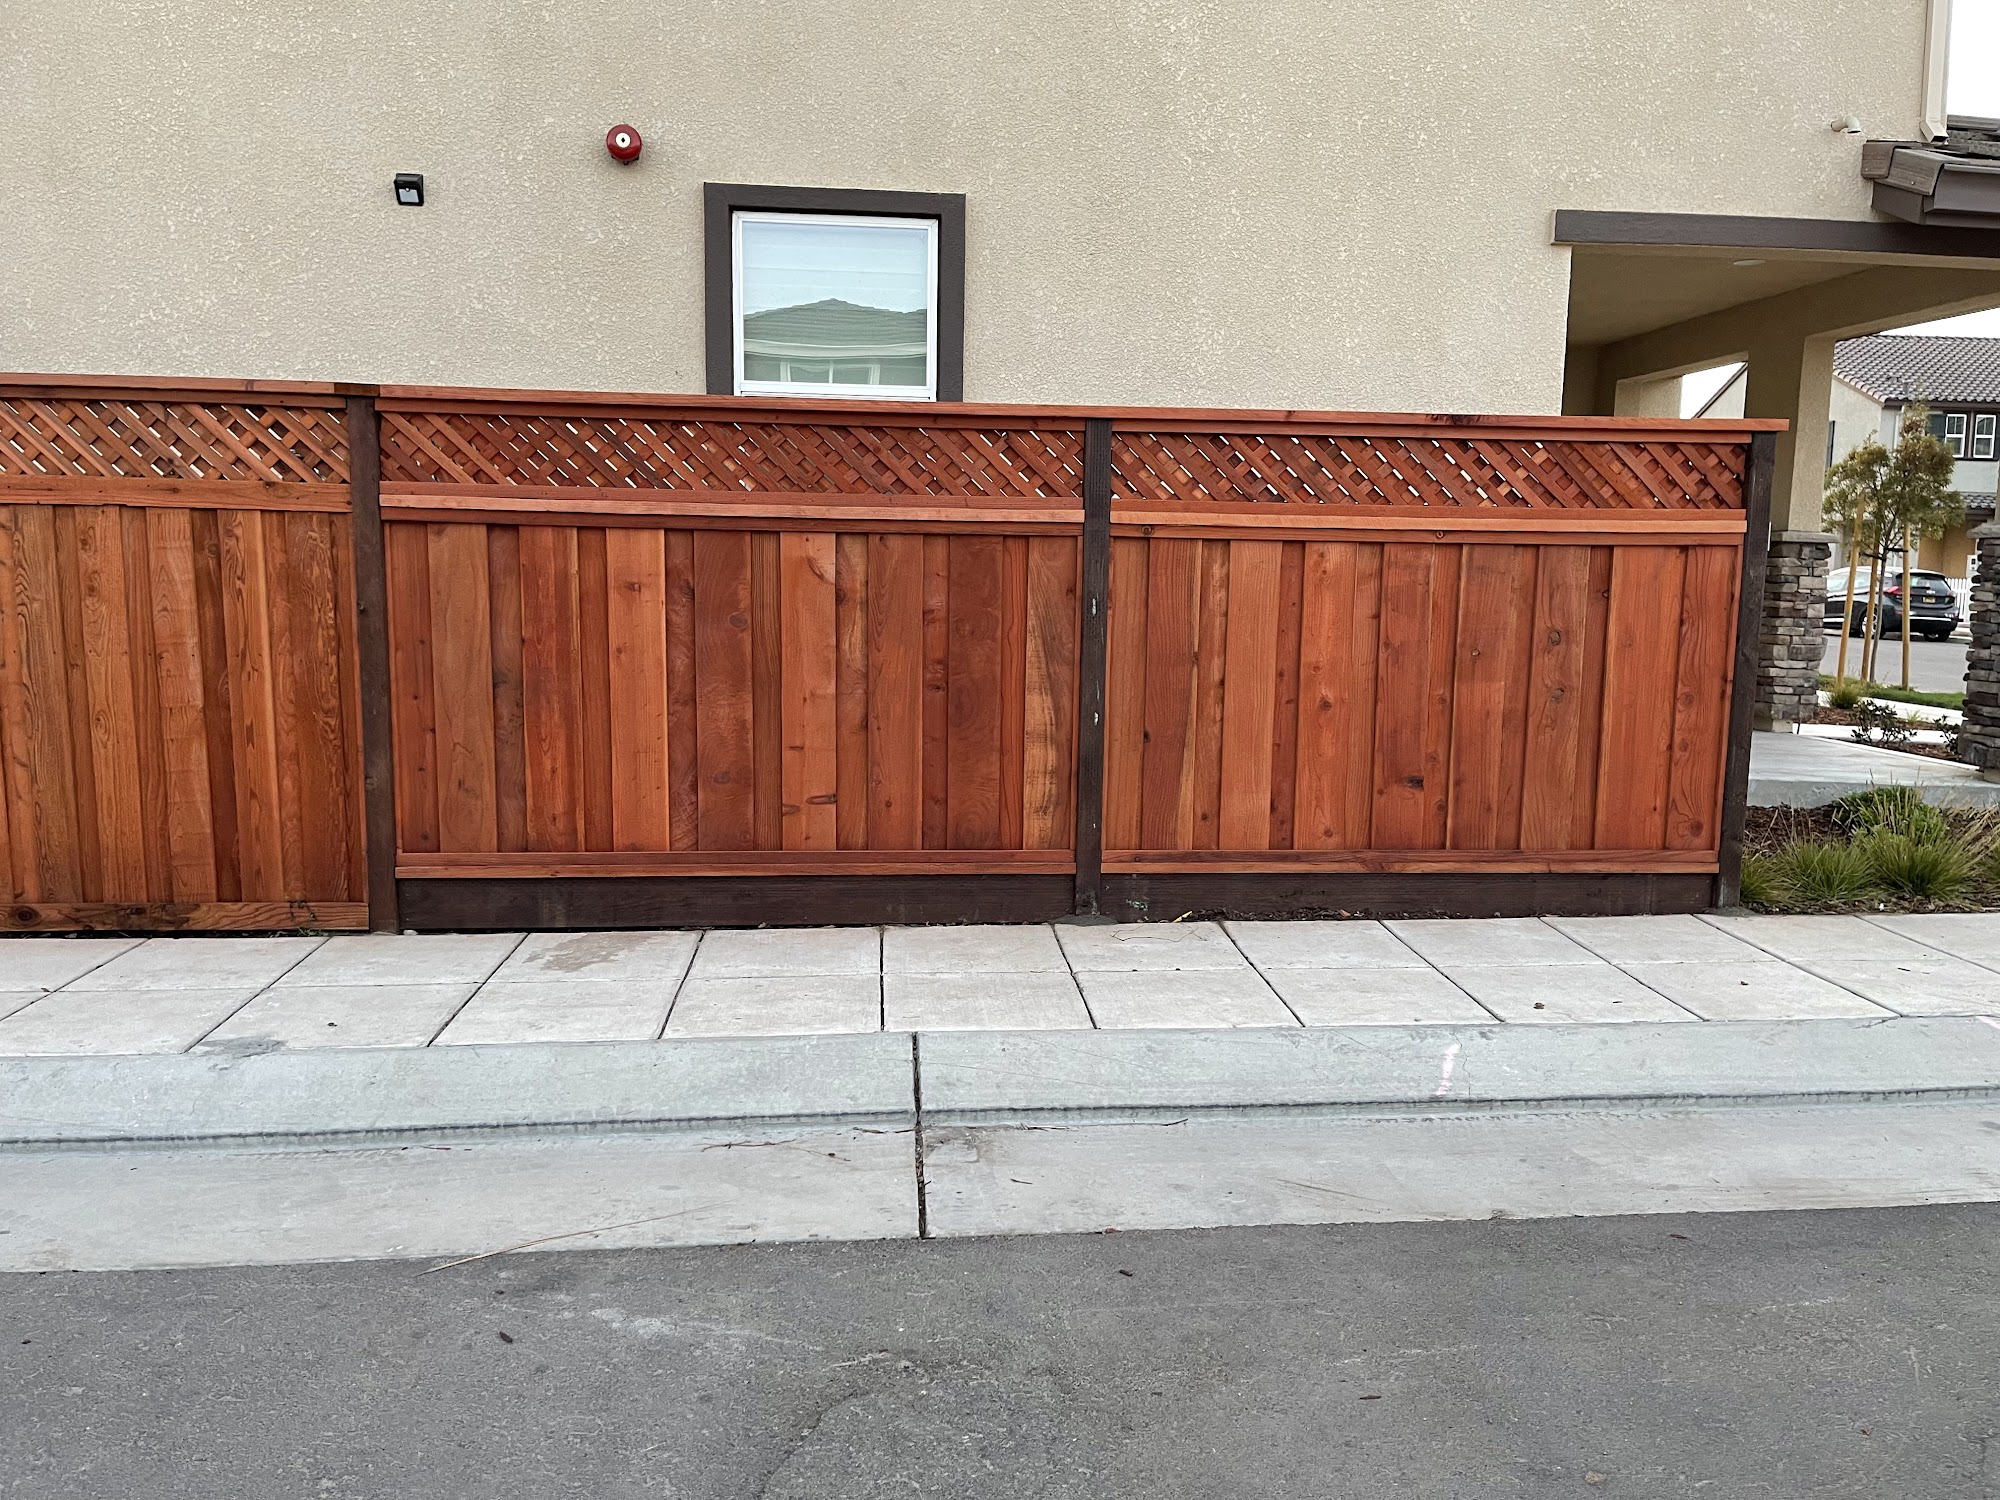 California Fences, Inc